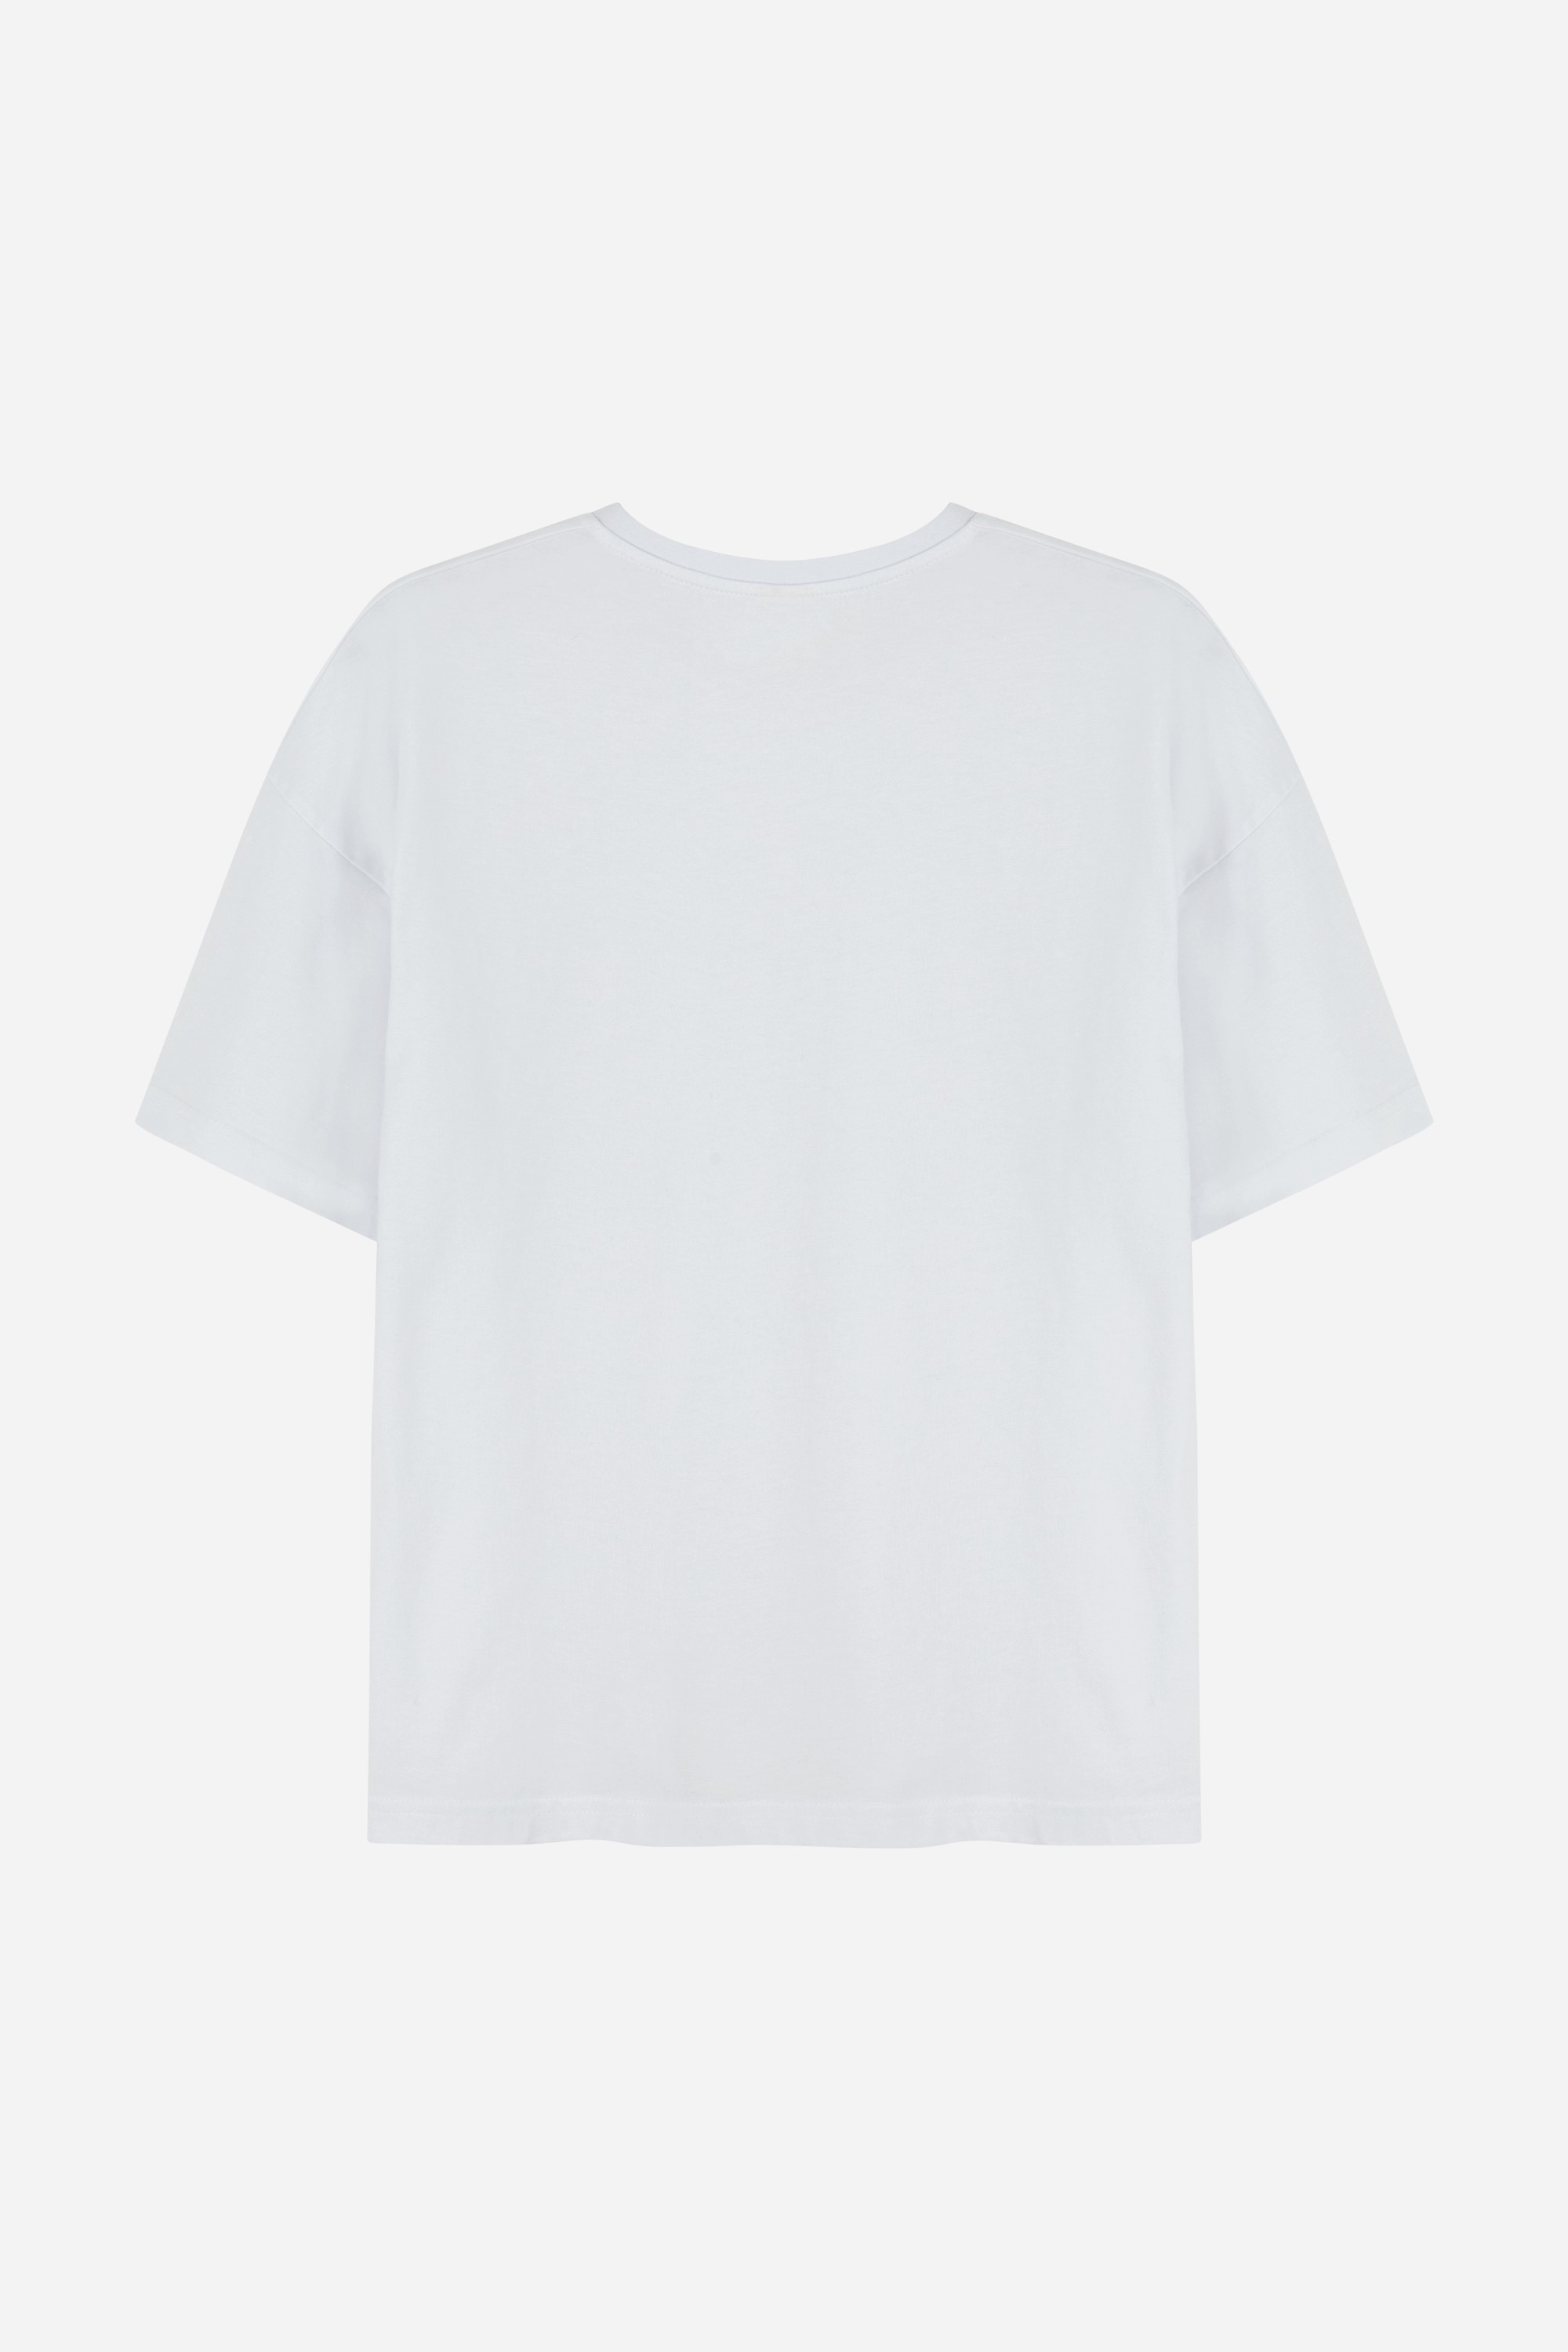 Kramer Nordbron Oversize T-shirt